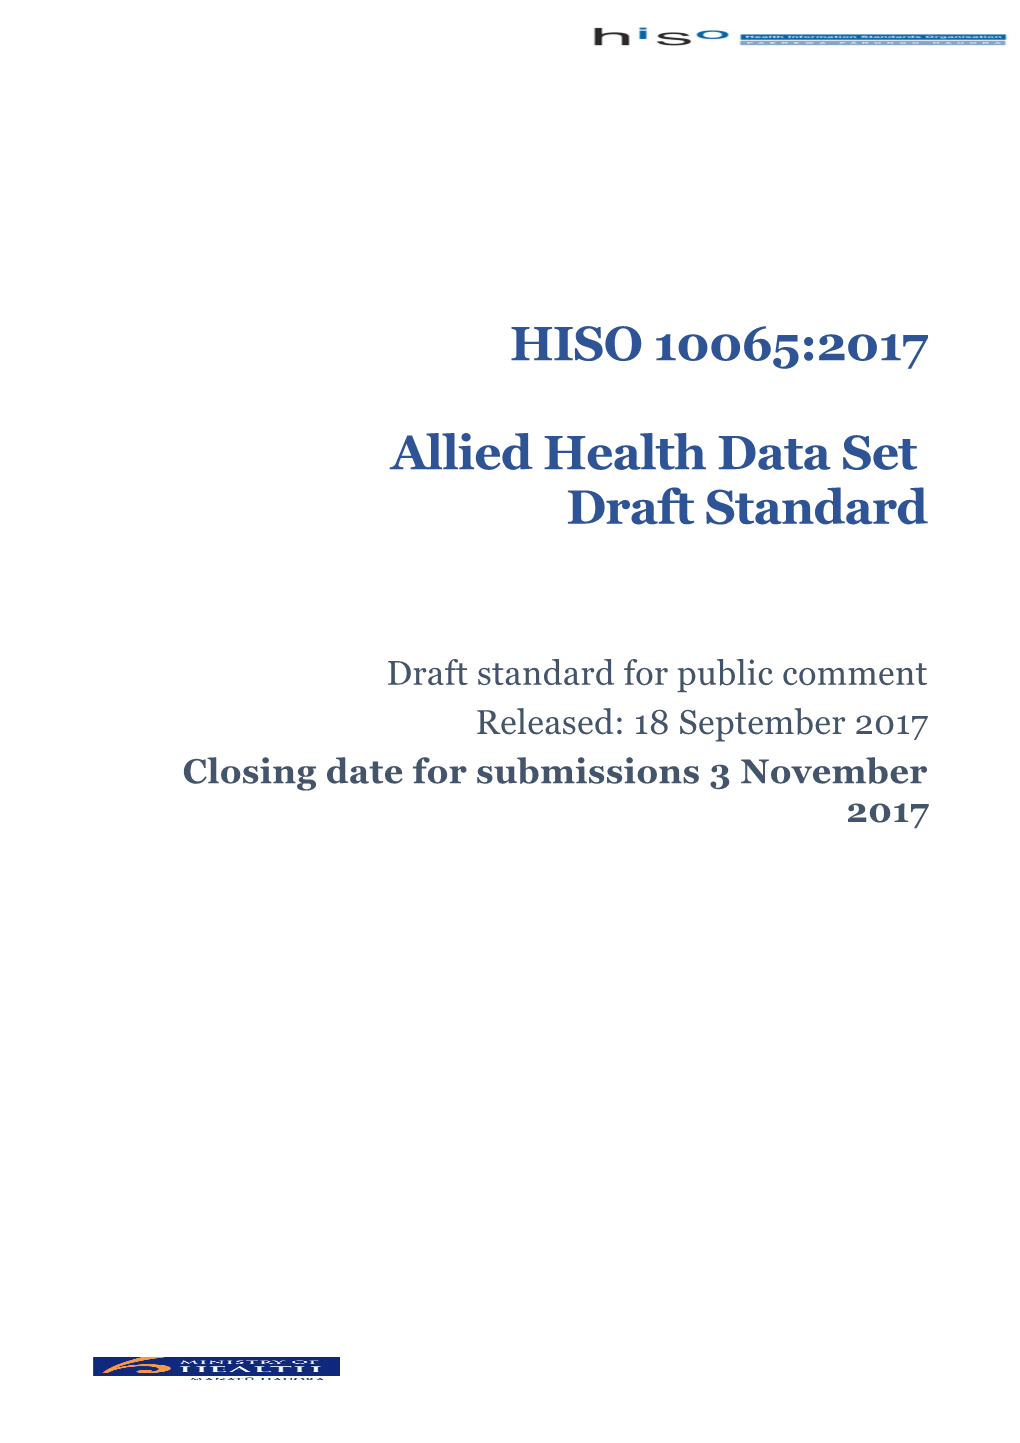 HISO 10065:2017 Allied Health Data Set Standard DRAFT VERSION 7.3